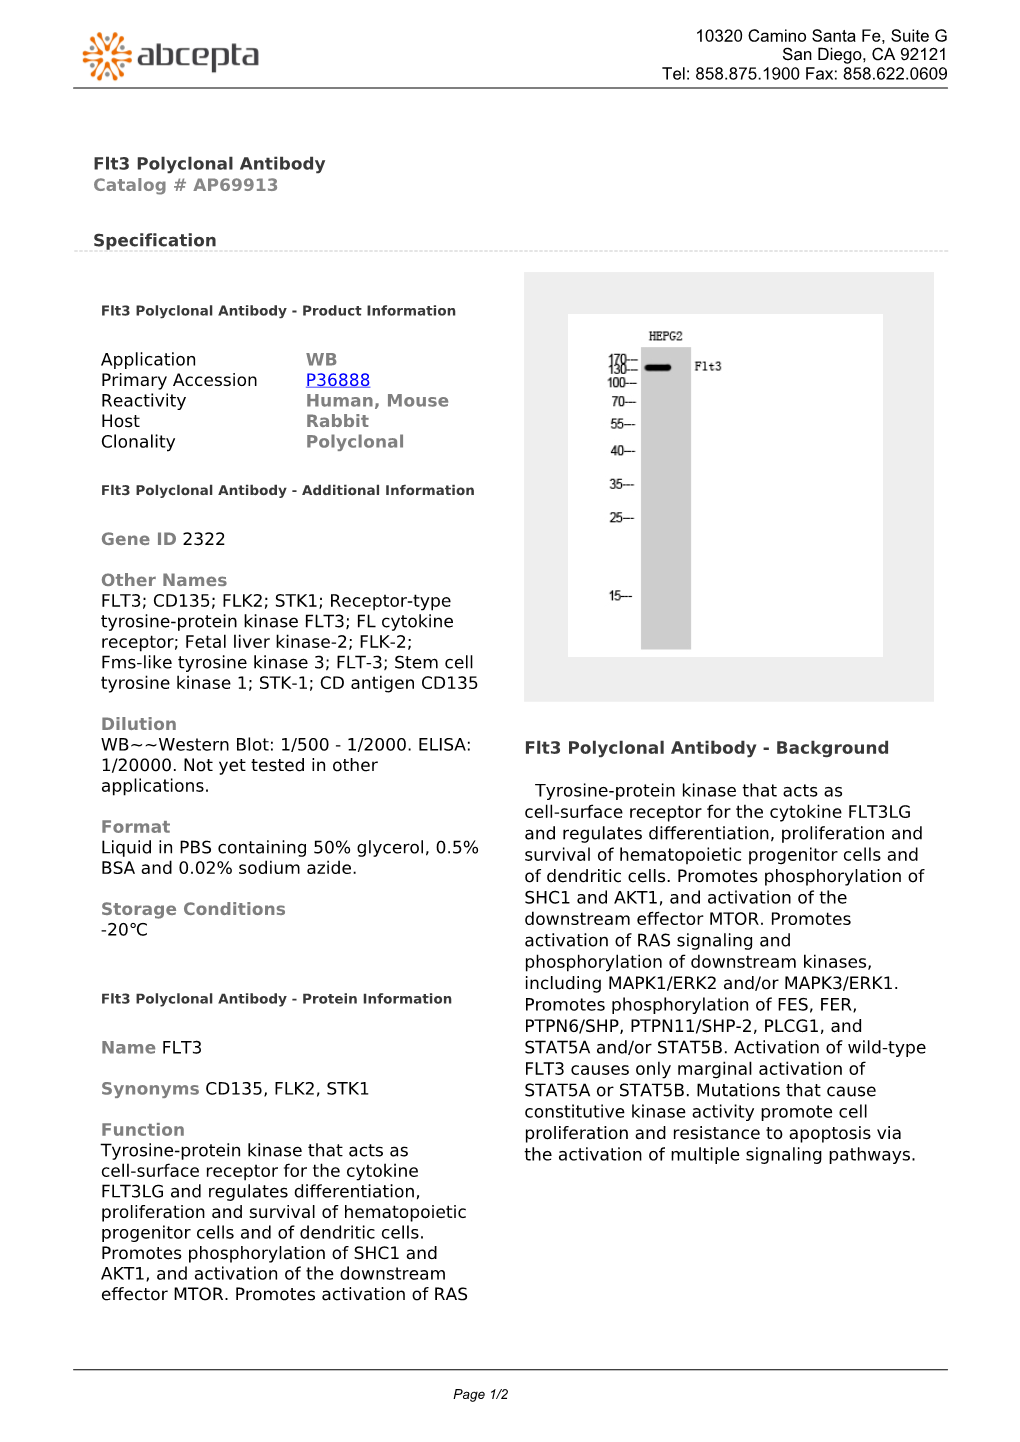 Flt3 Polyclonal Antibody Catalog # AP69913